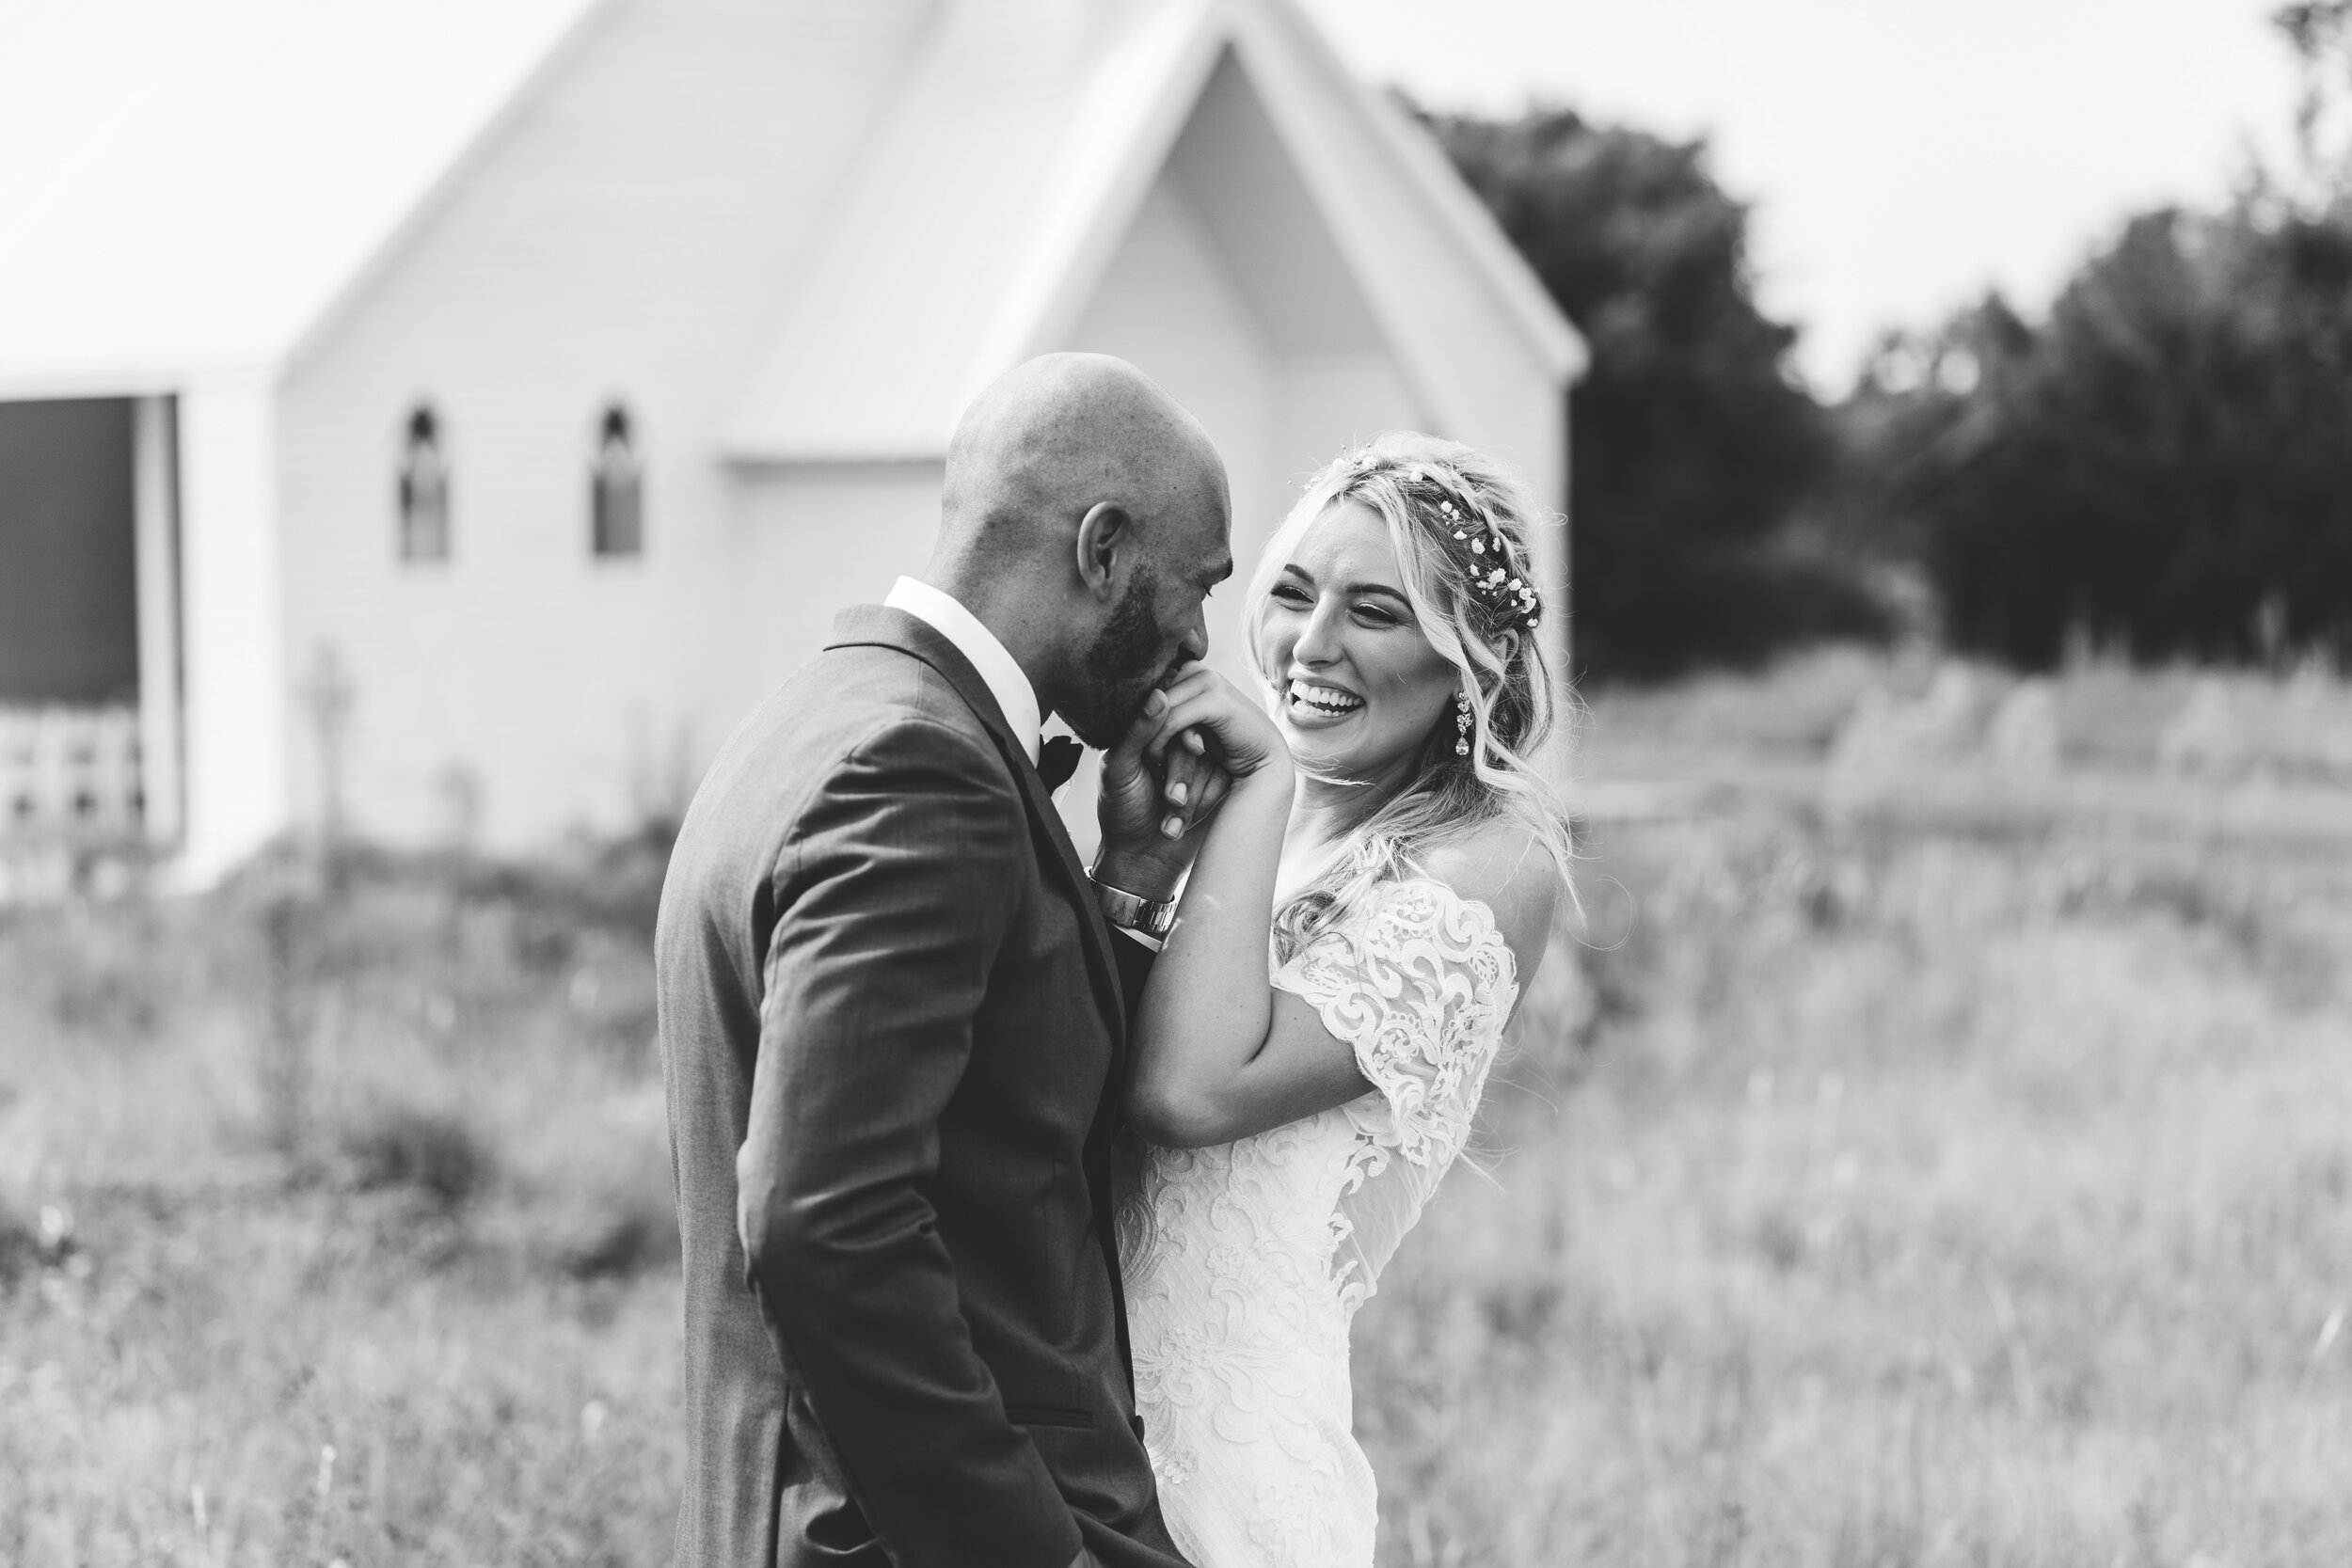 Hayley + Lorenzo - Summer White Chapel Wedding at Stone Hill Barn in Augusta, Kansas108.jpg